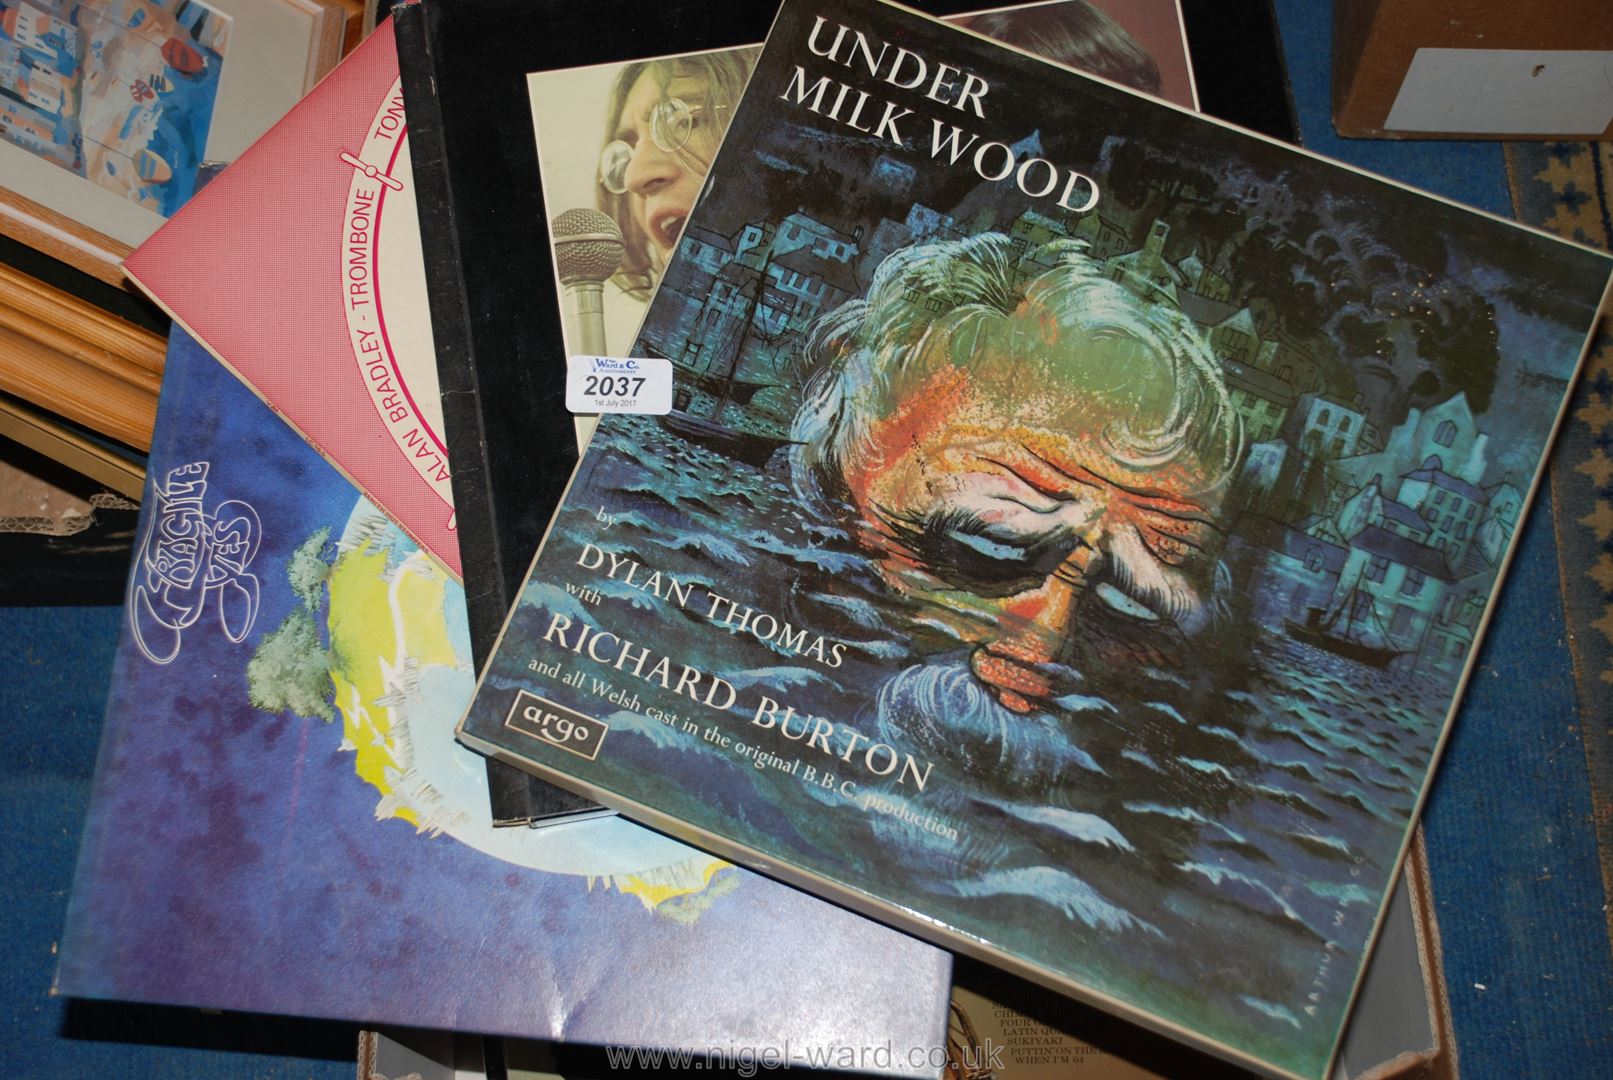 A box of vinyl LP's including Under Milkwood